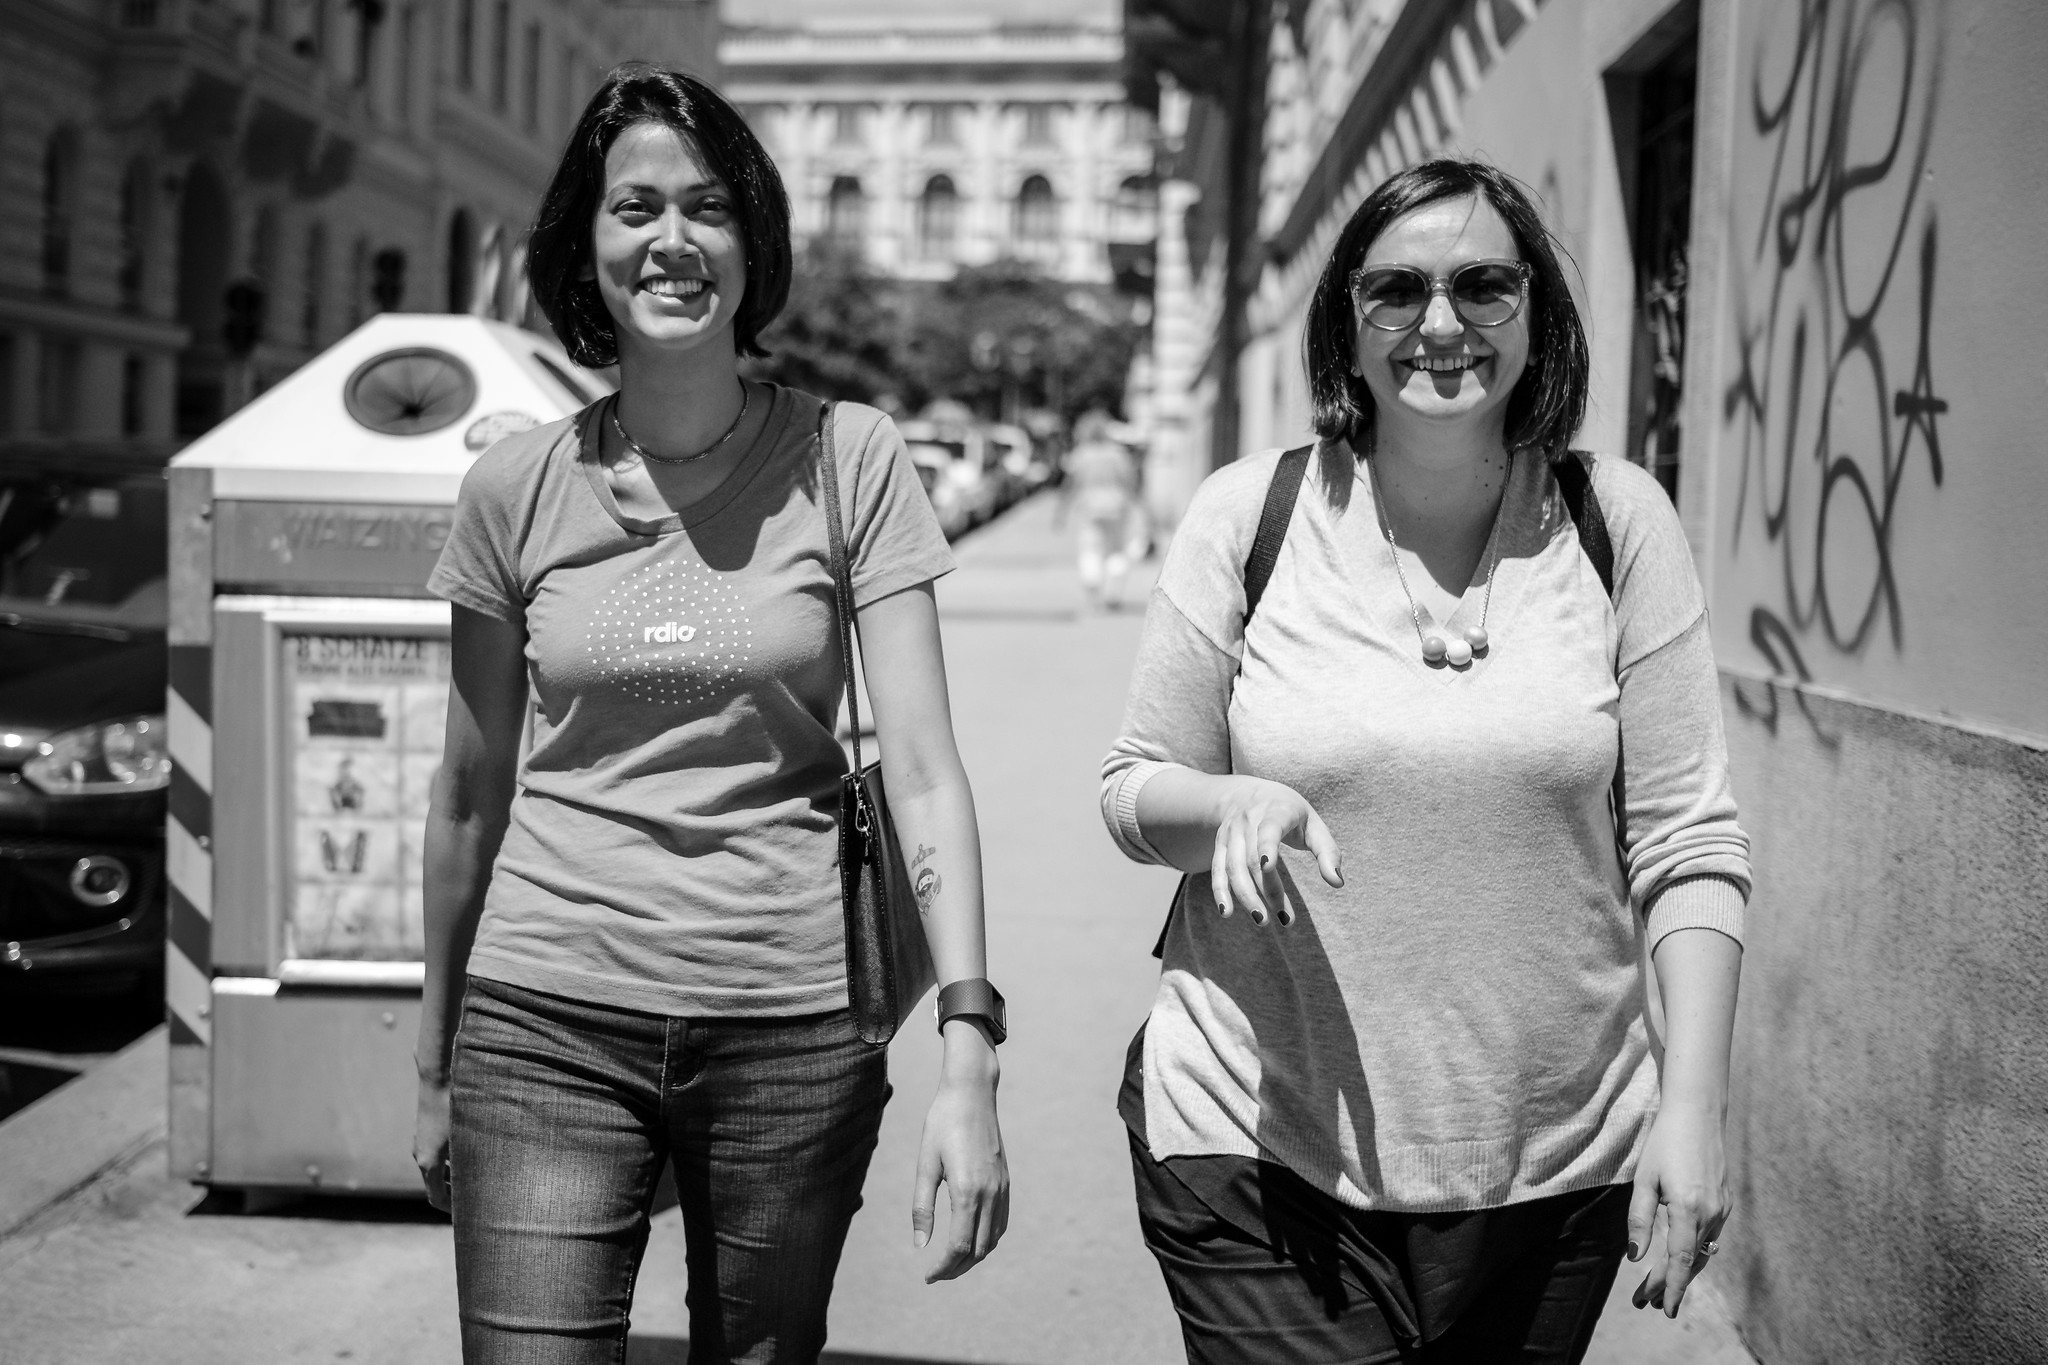 Josepha Haden and Francesca Marano walking around Vienna